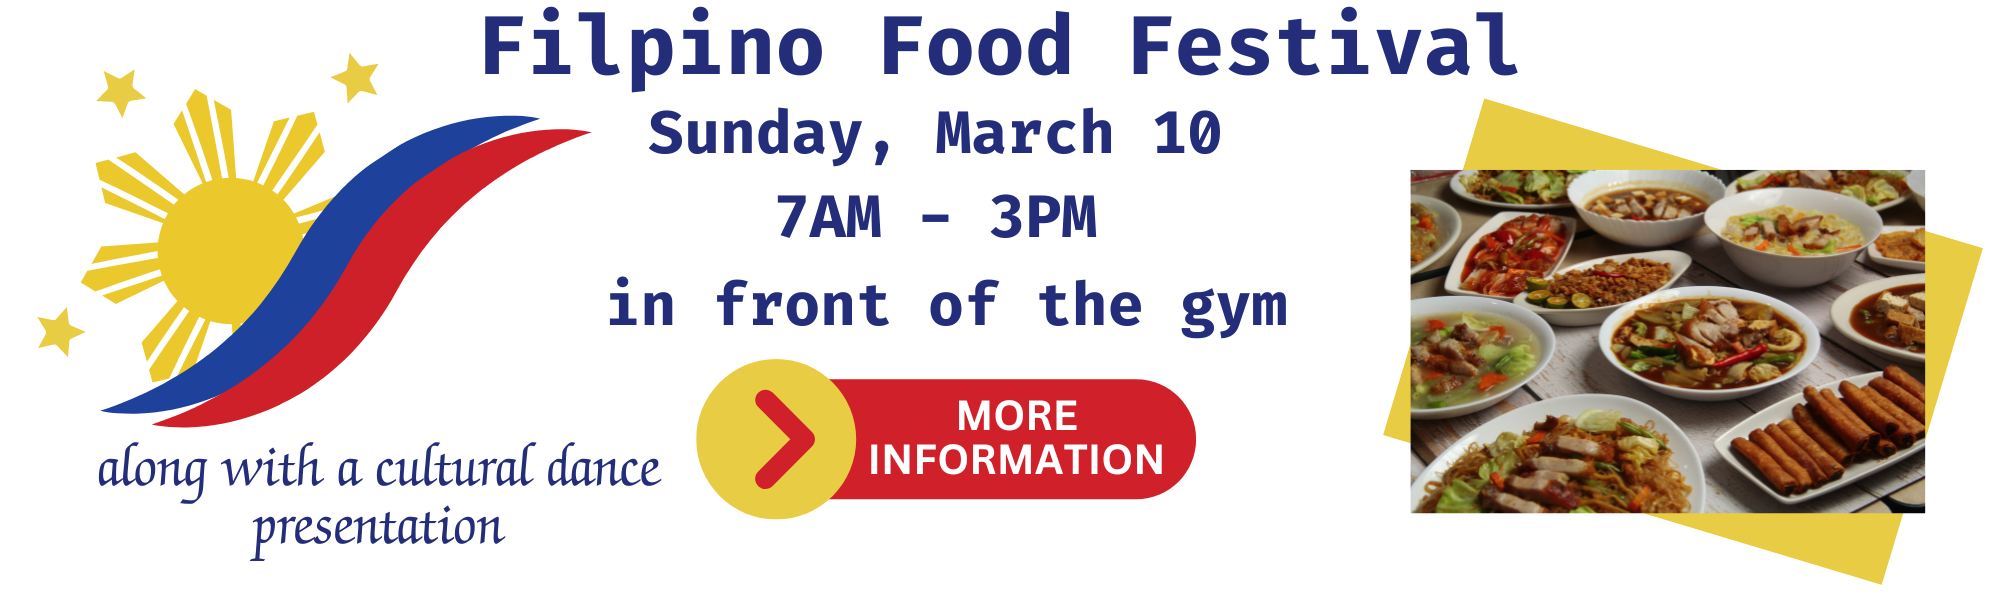 Filipino Food Festival Sunday March 10 